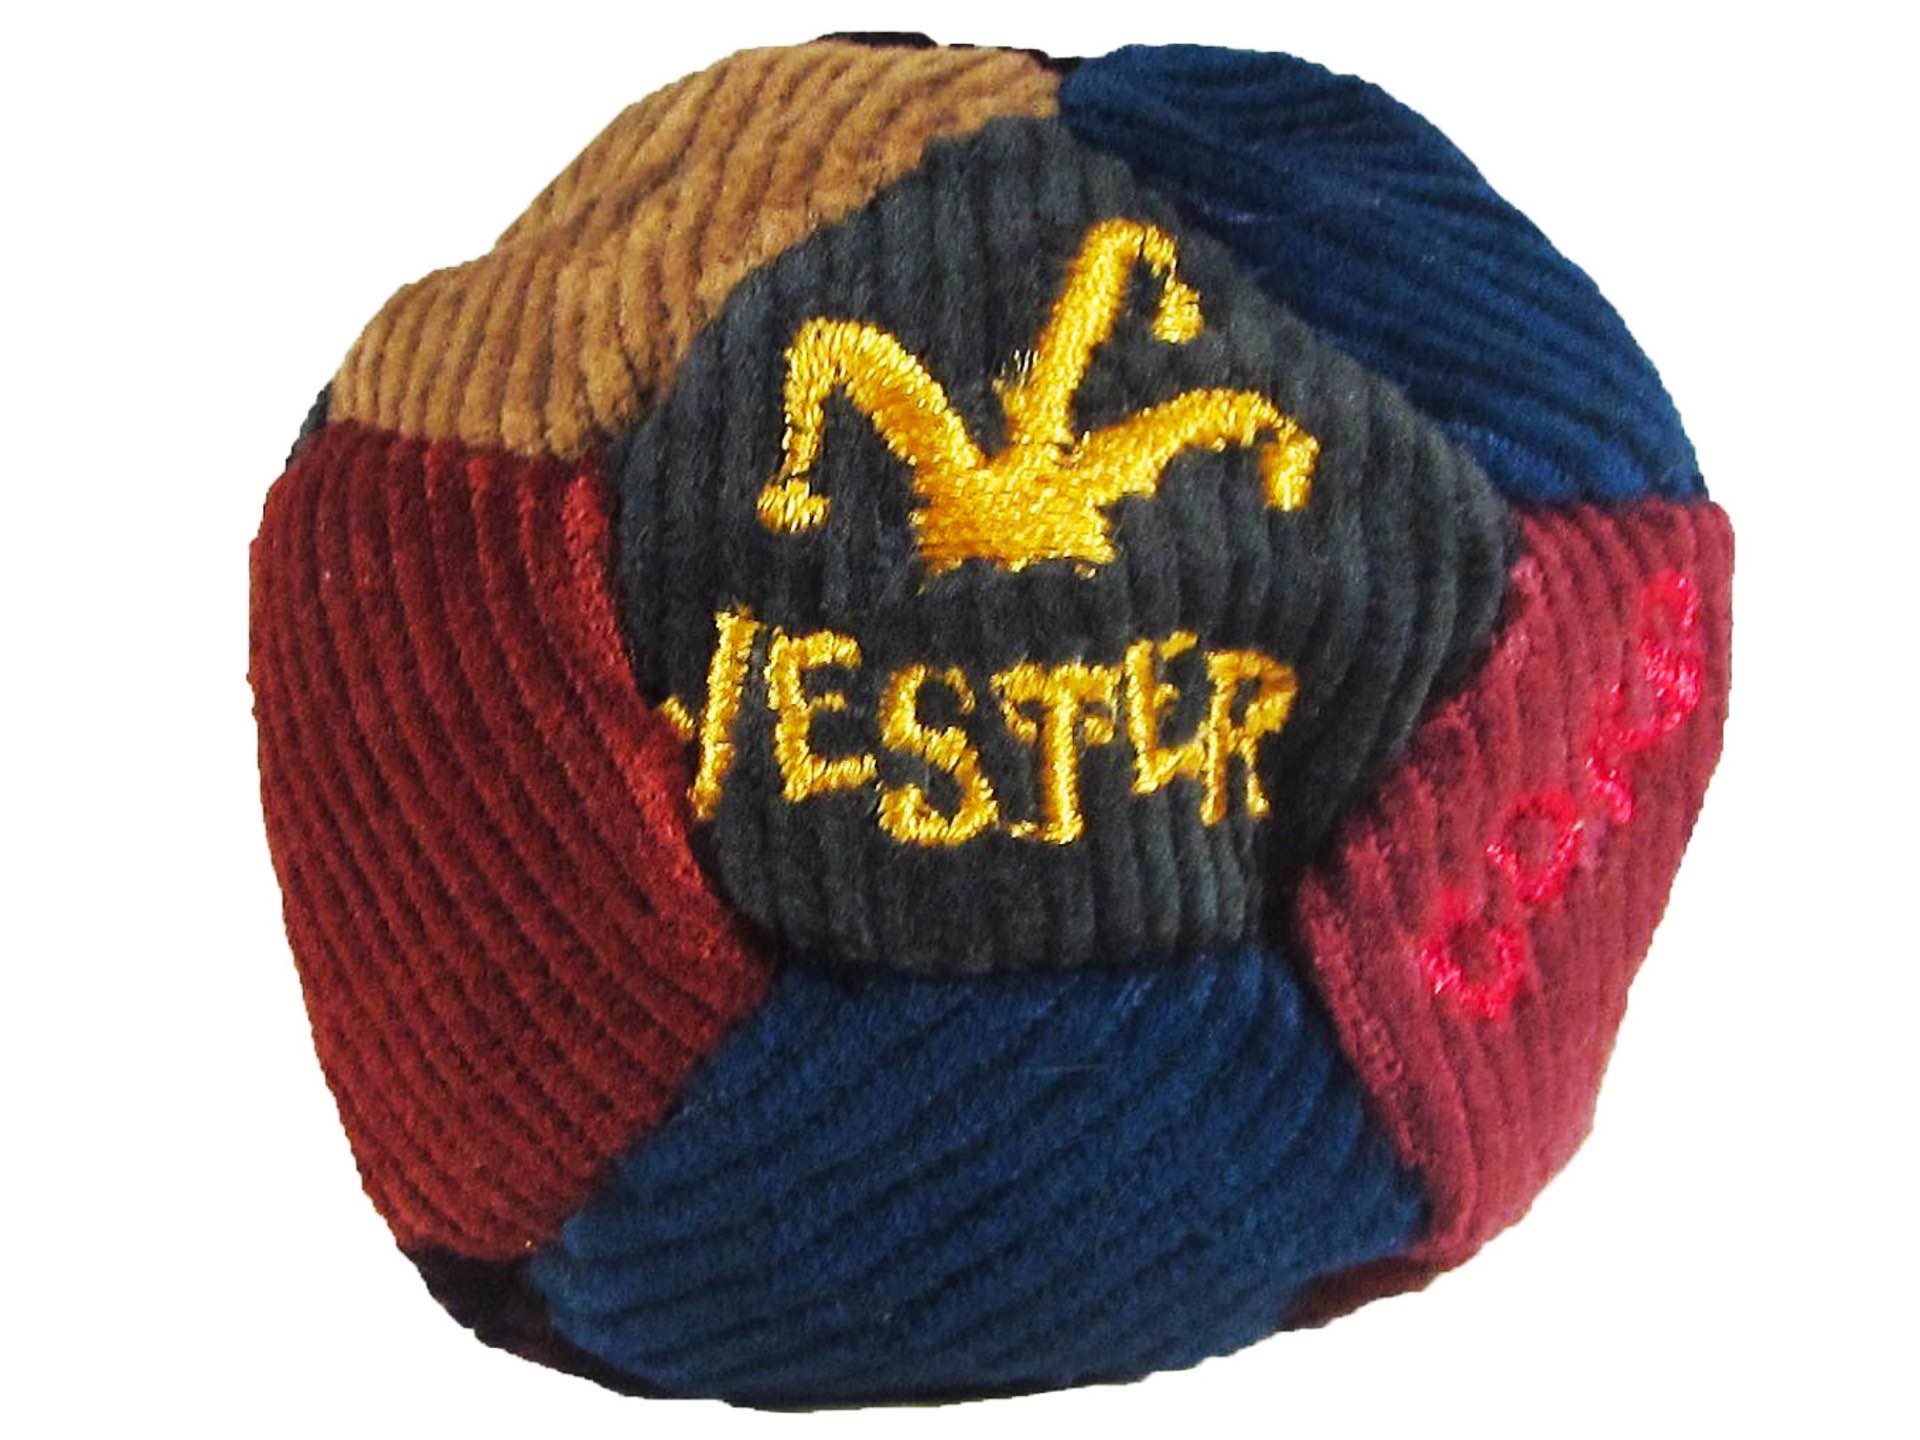 Flying Clipper “Jester” hacky sack. ($12)